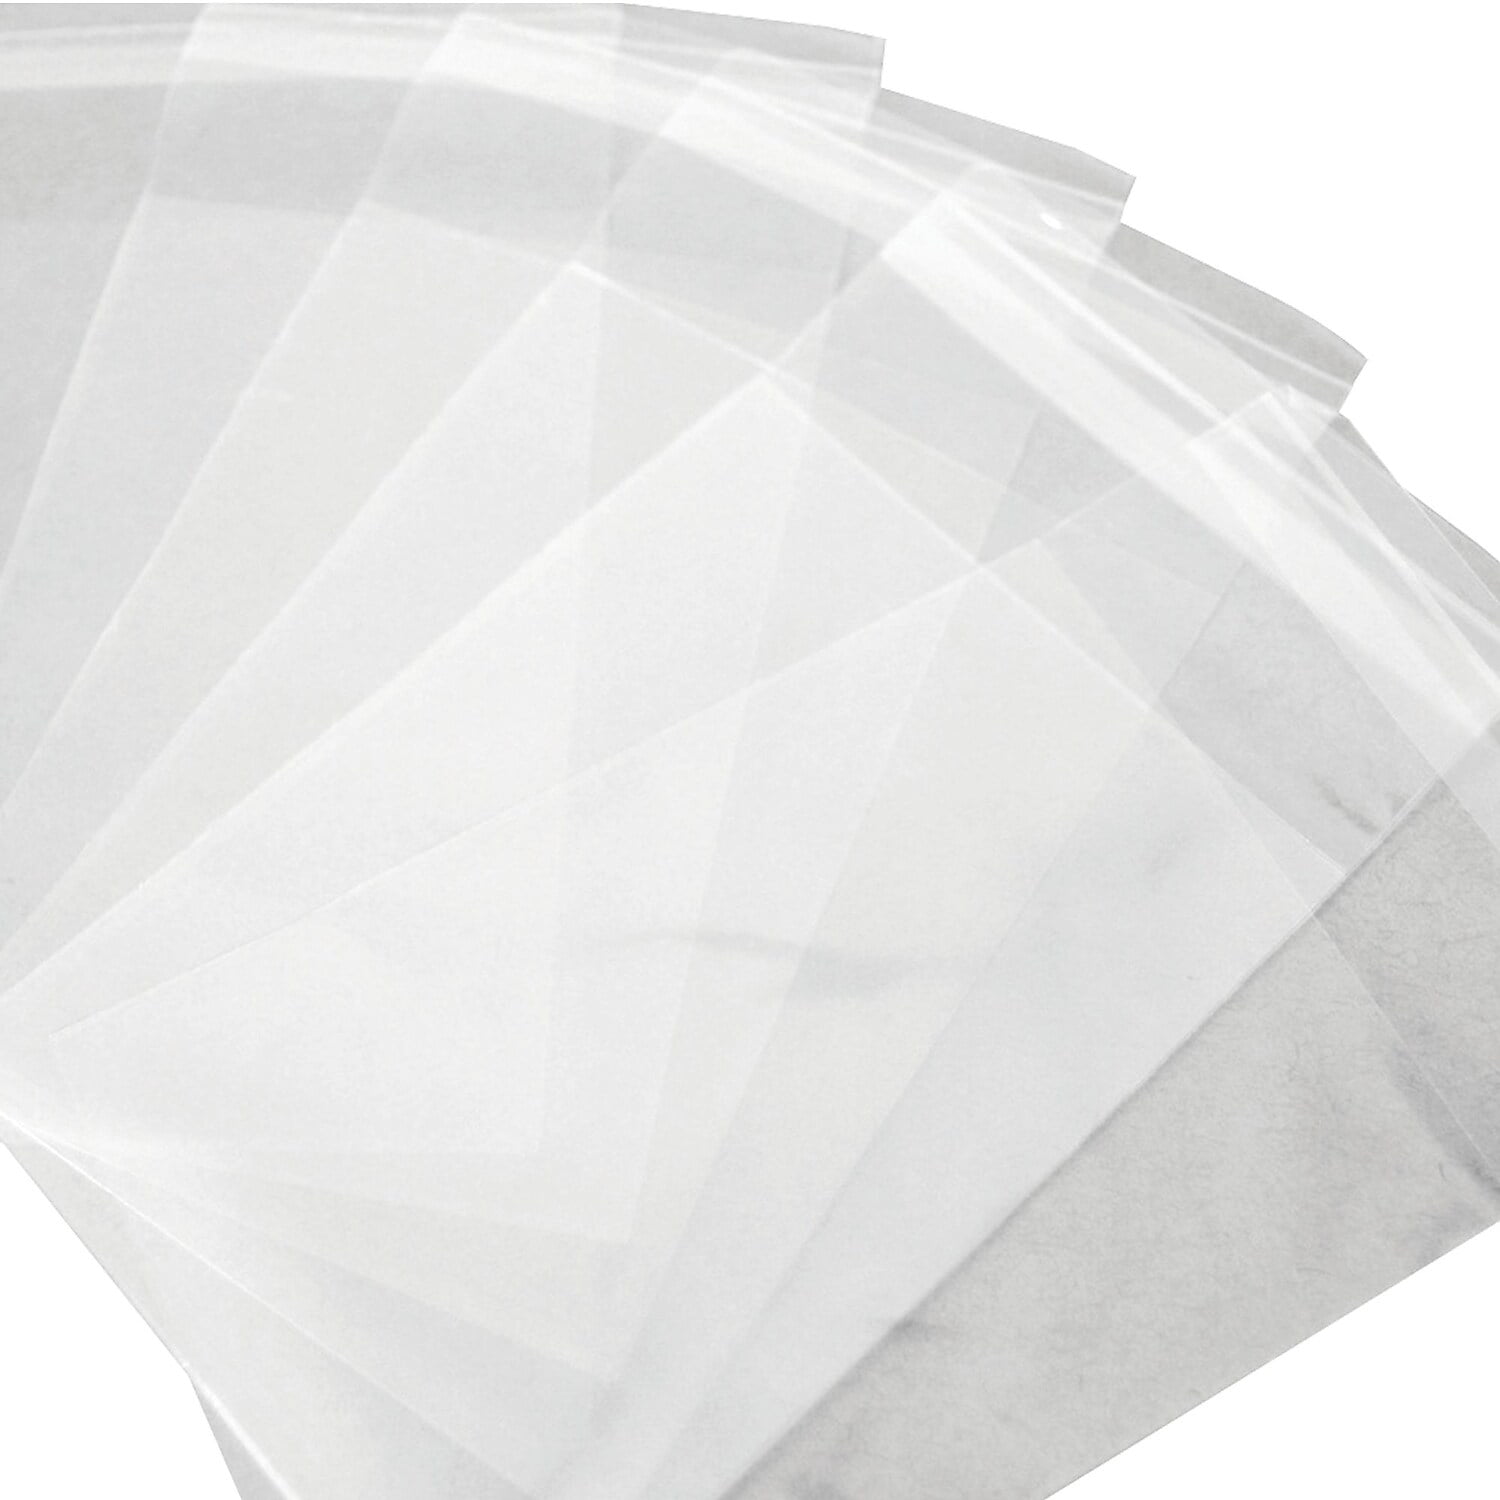 1000 x 10" x 12" Garment Packing Cover Polypropylene Resealable Display Bags 